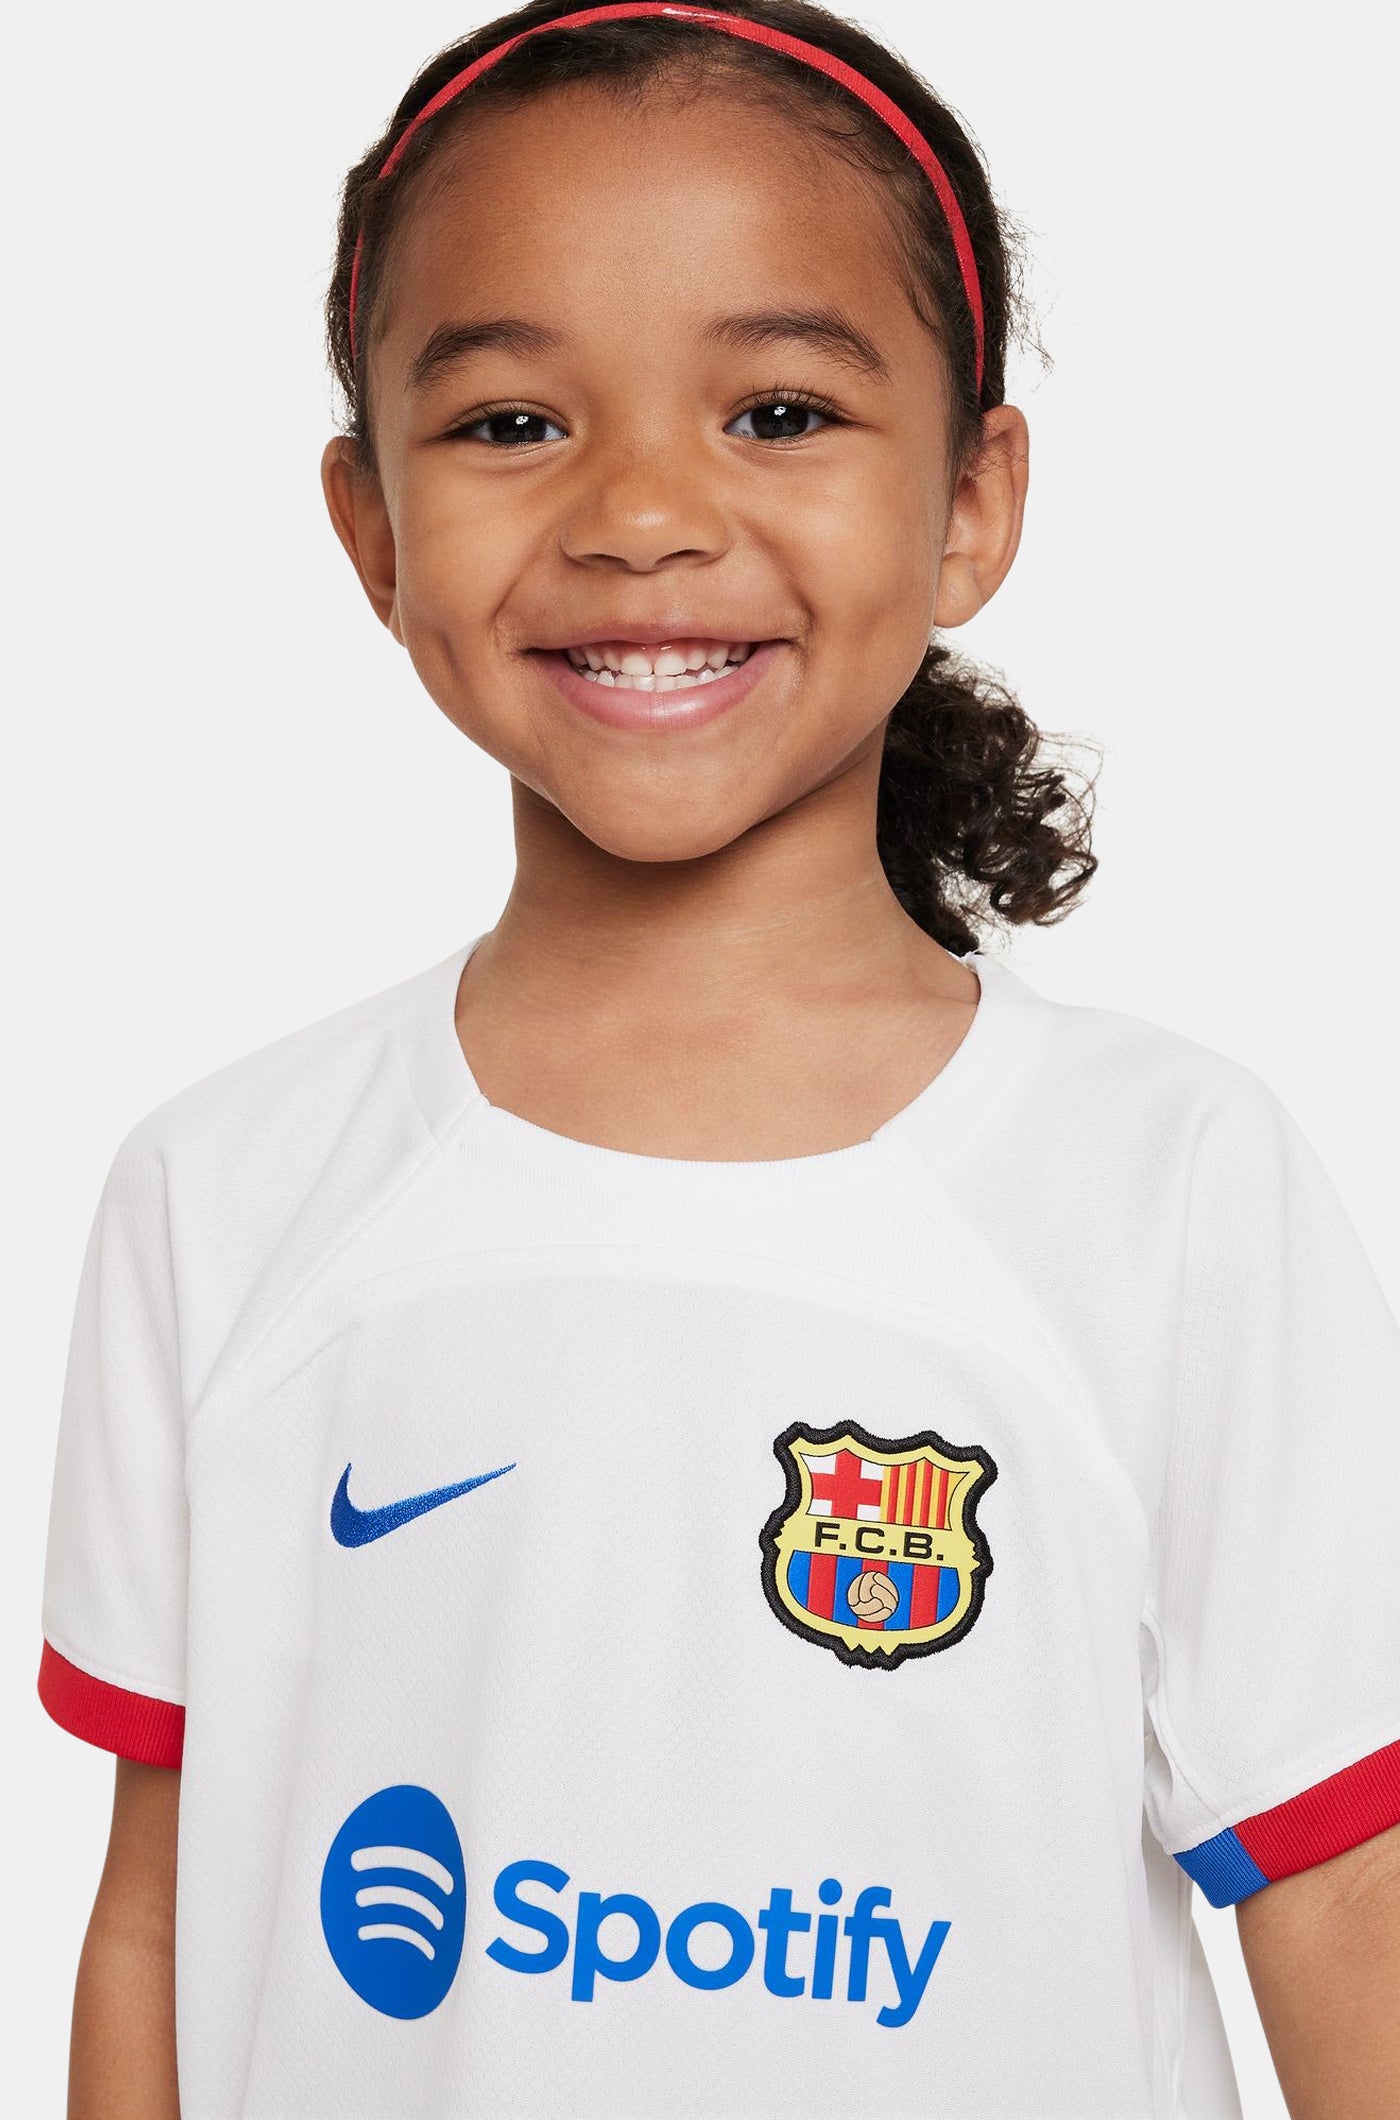 FC Barcelona away Kit 23/24 – Younger Kids  - MARÍA LEÓN